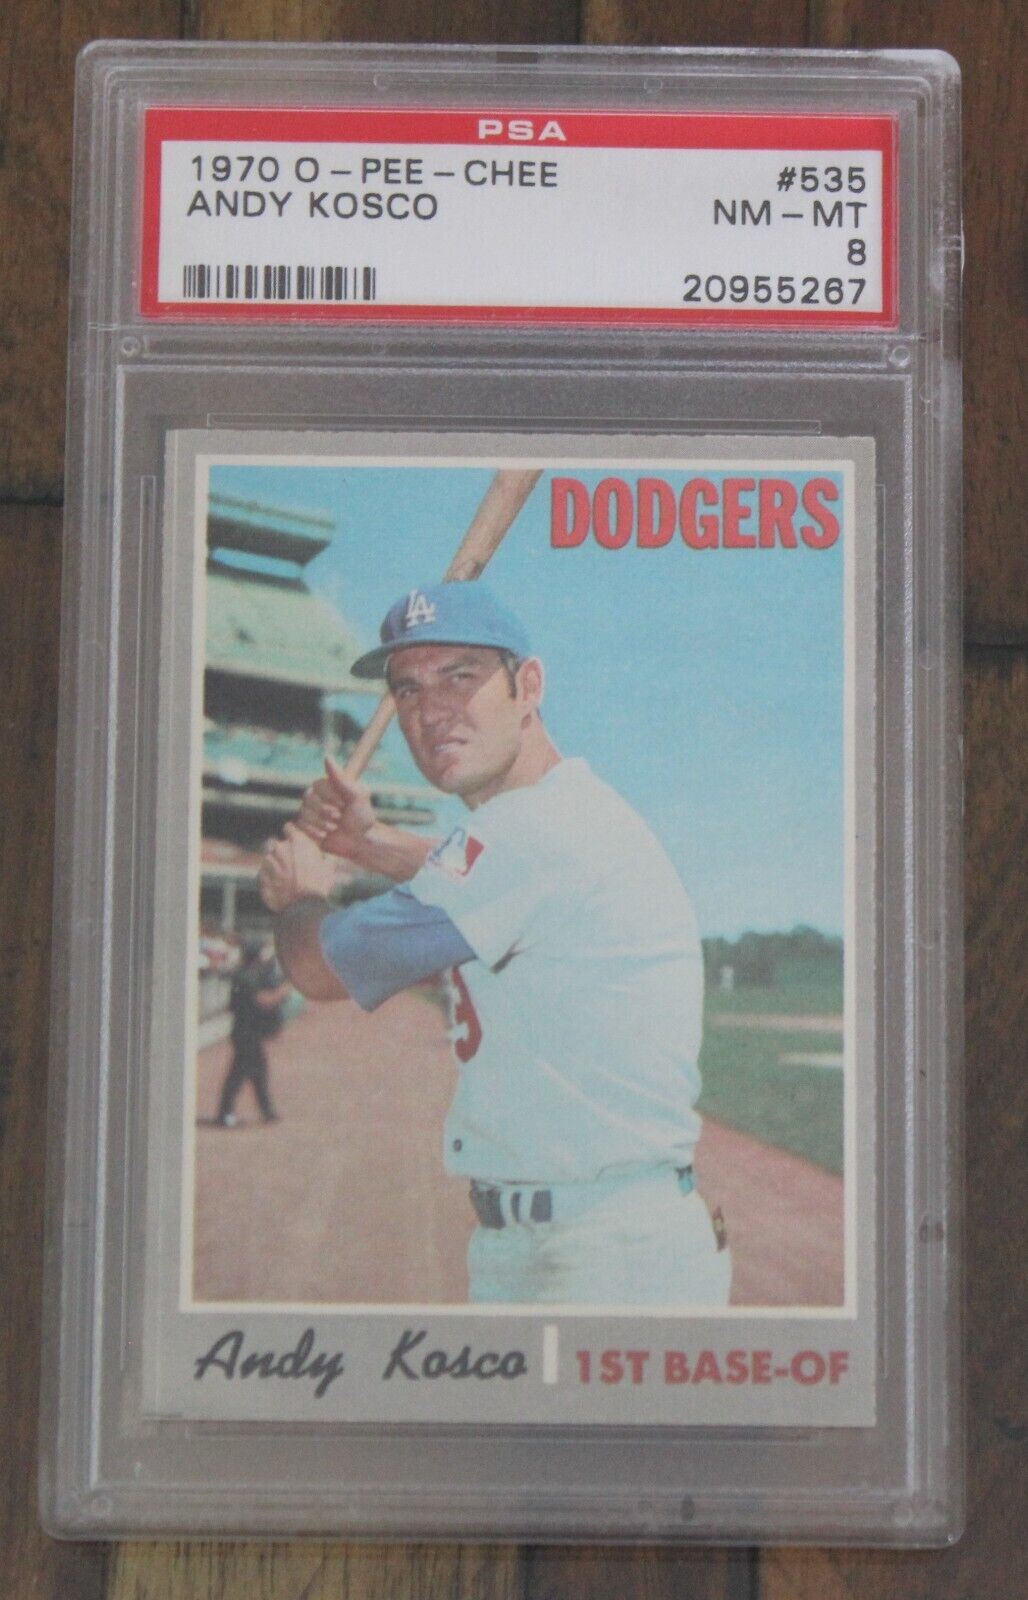 1970 O-Pee-Chee Andy Kosco #535 PSA NM-MT 8 Baseball Card